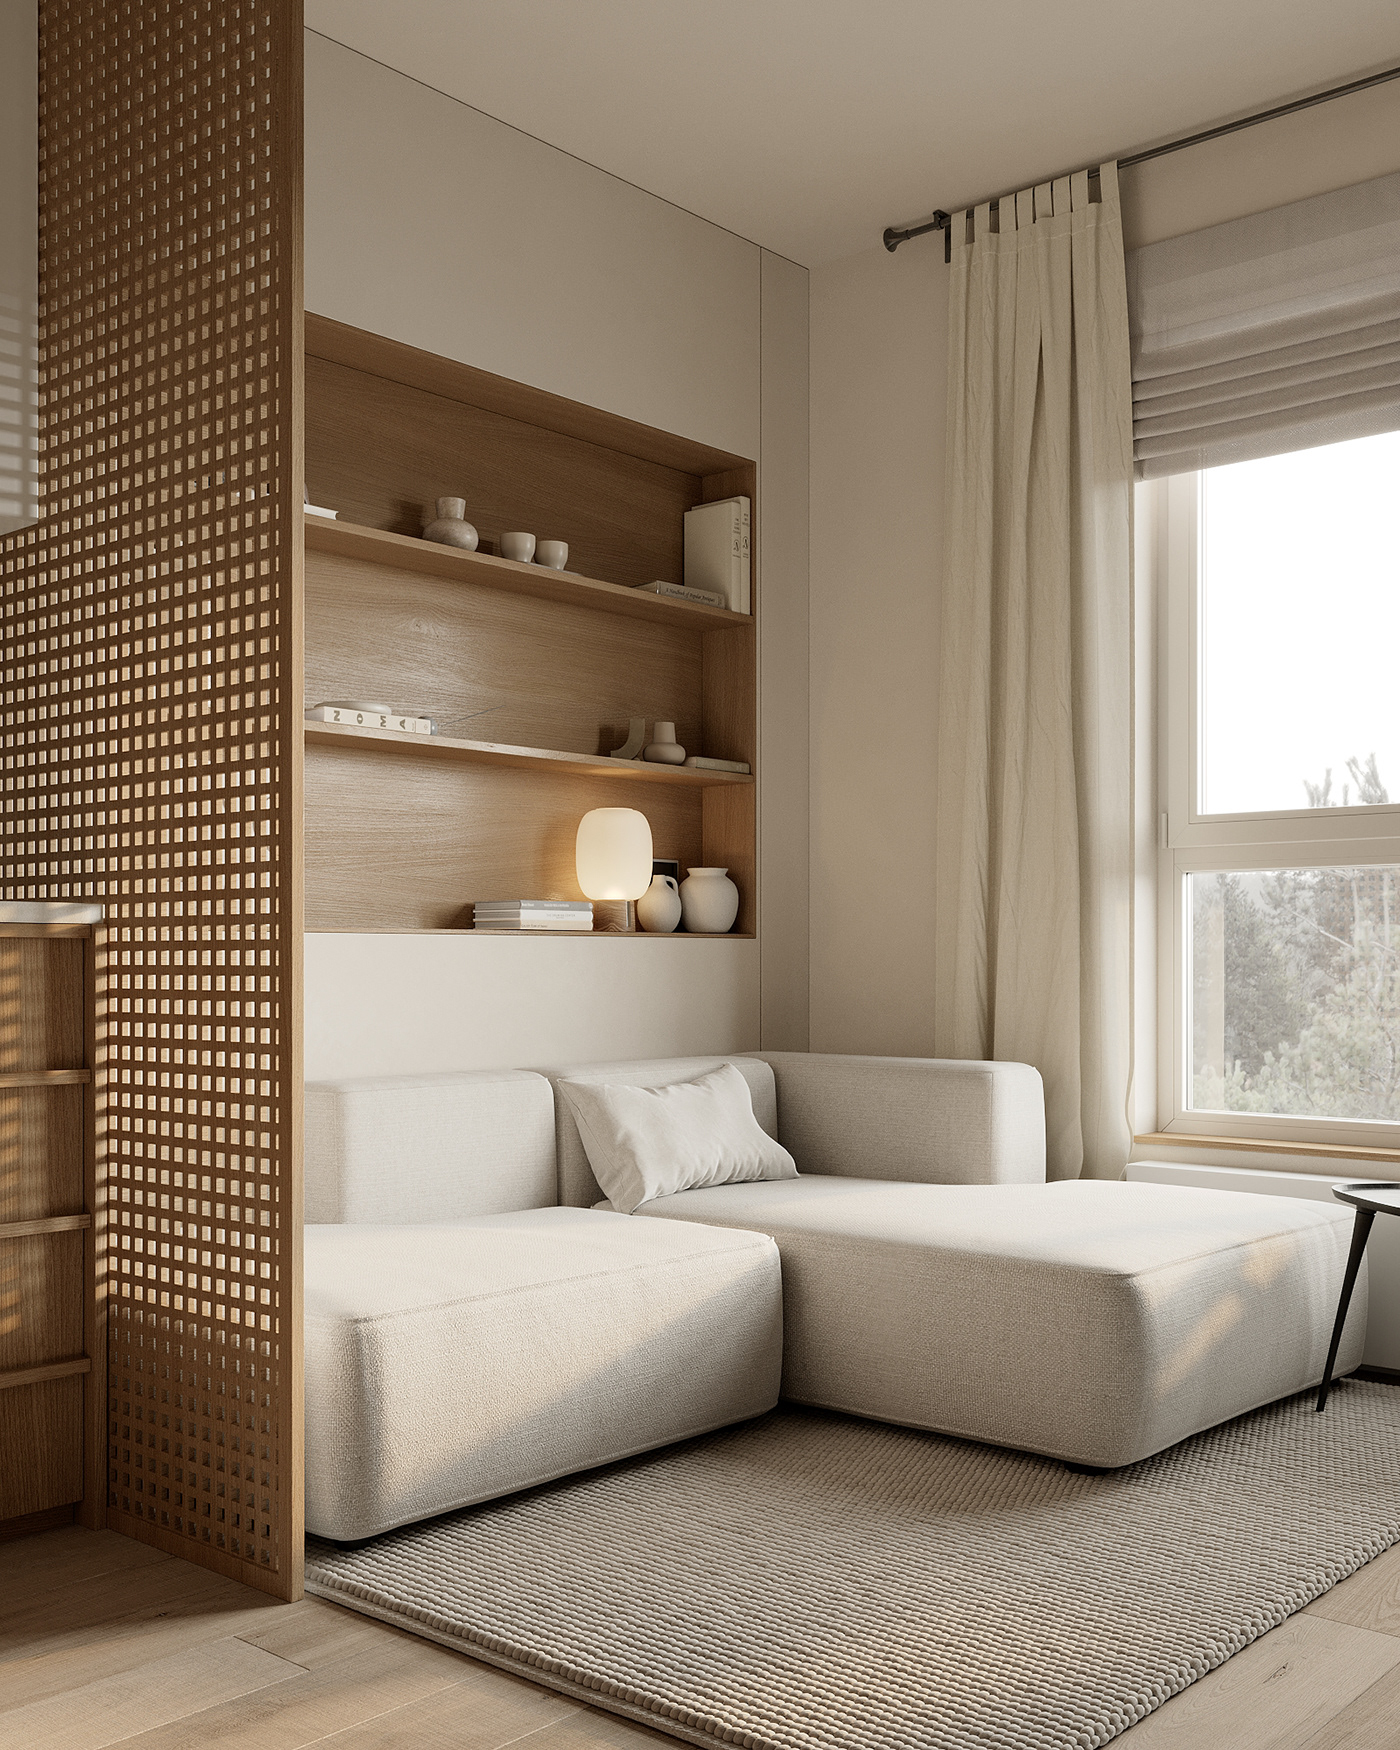 visual visualisation design design interior kitchen living room living space hallway